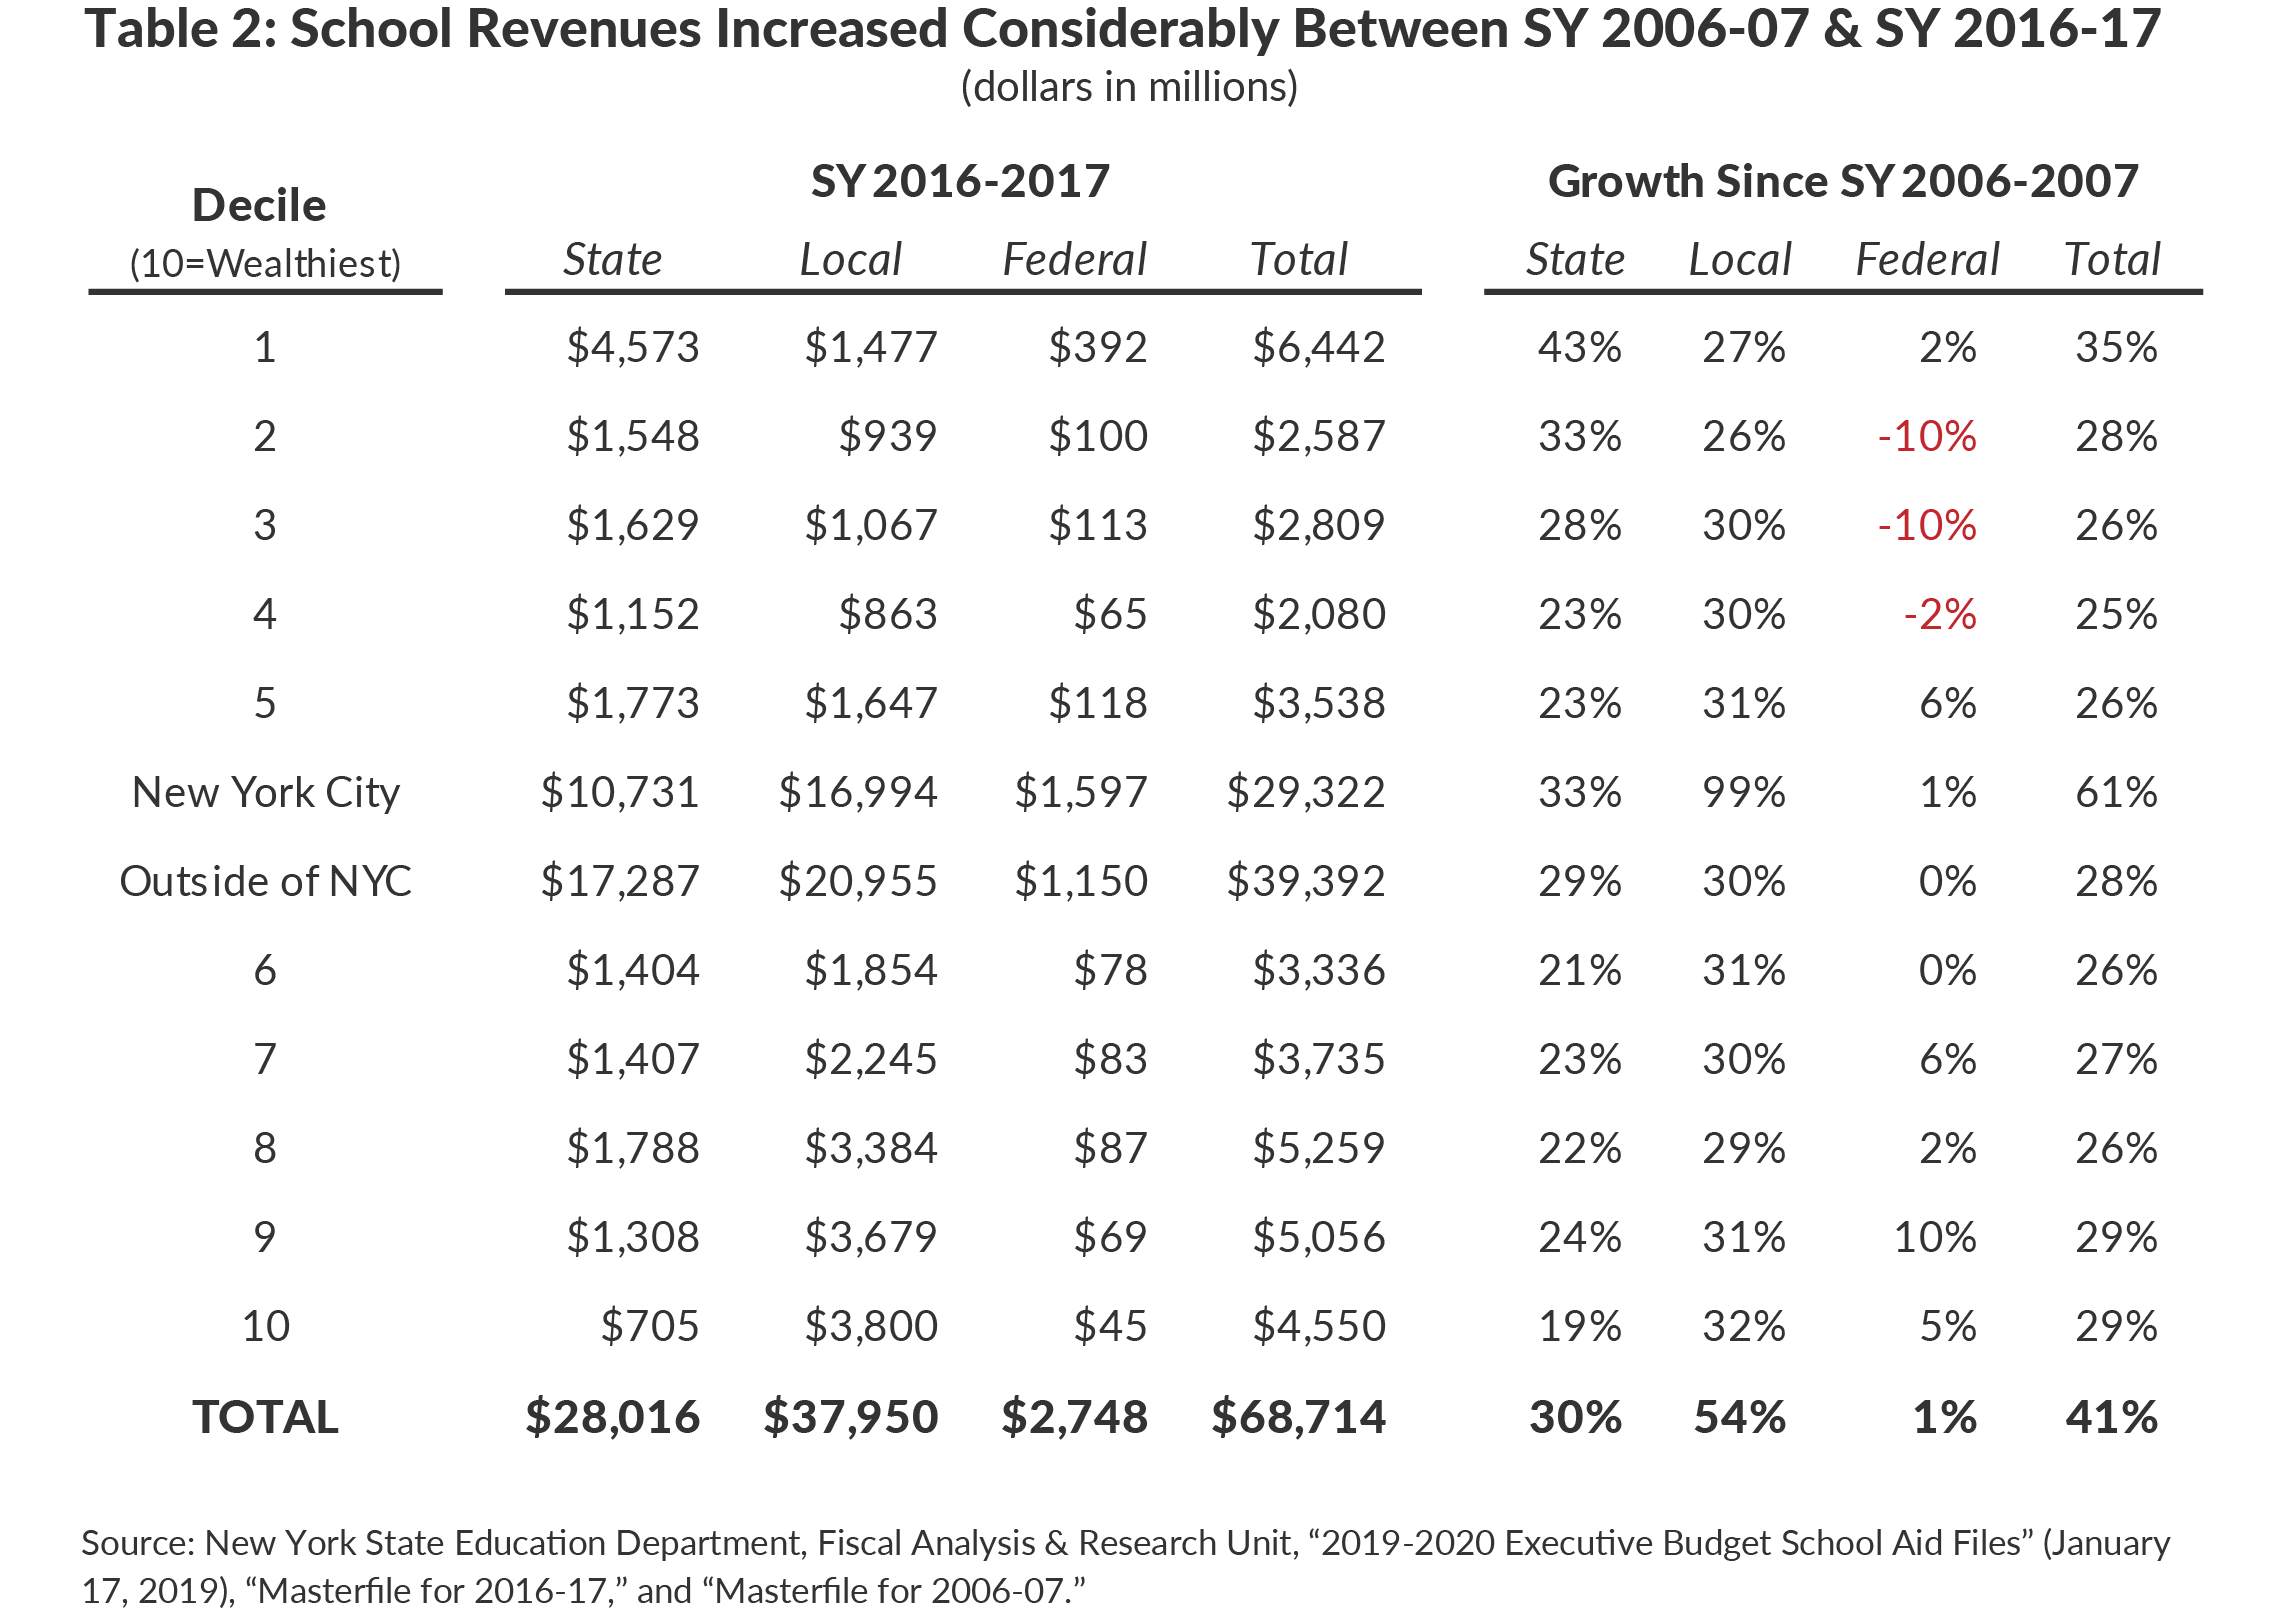 Table 2: School Revenues Increased Between SY 2006-2007 & SY 2016-2017 